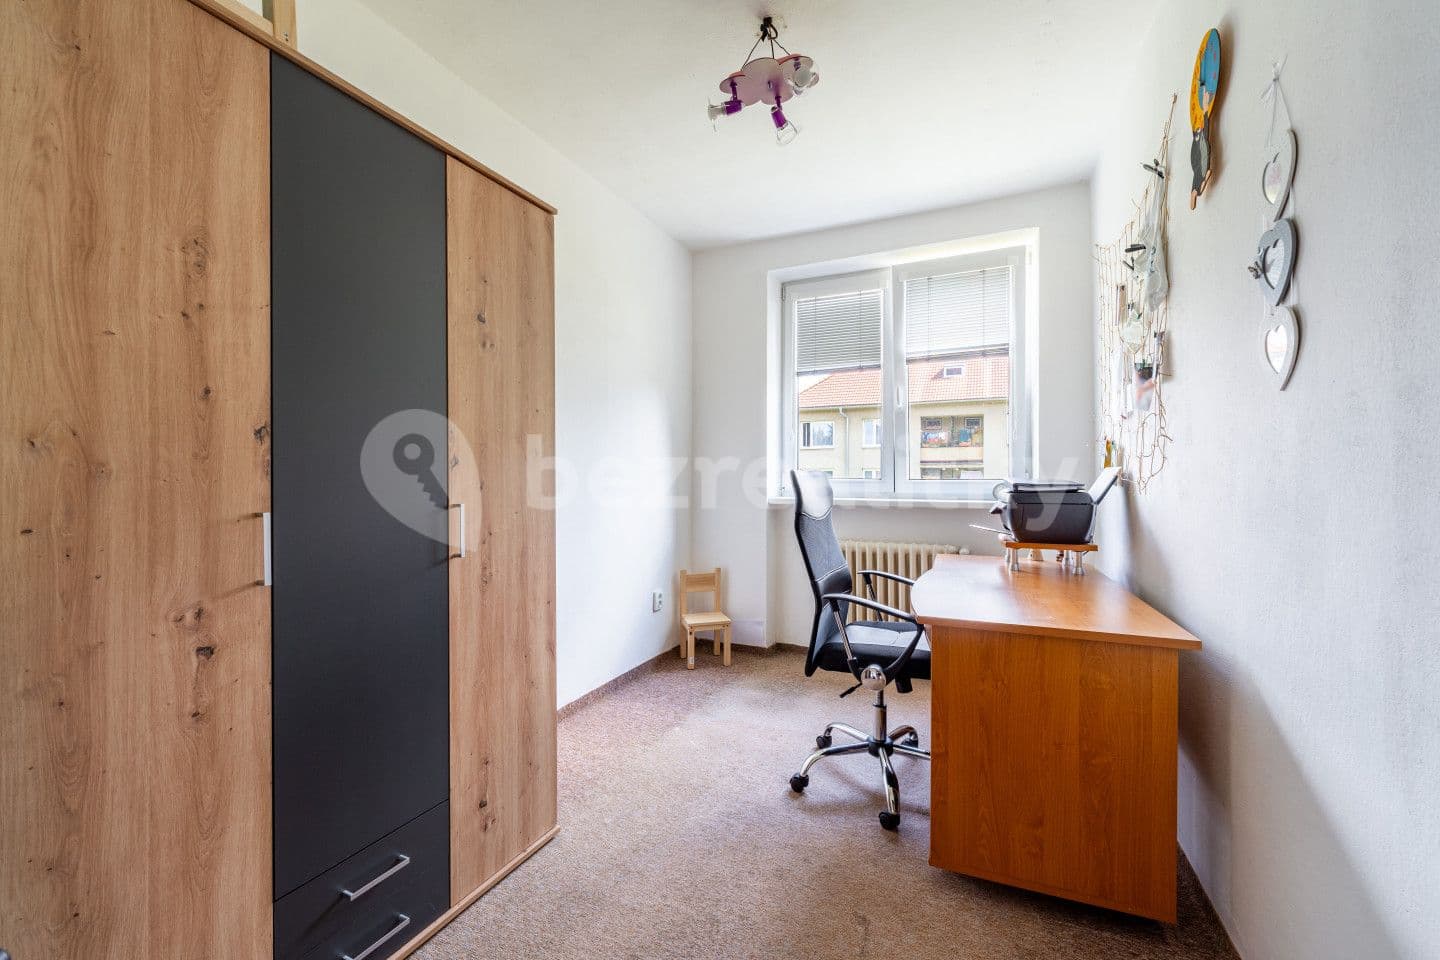 3 bedroom flat for sale, 57 m², Jihlava, Vysočina Region